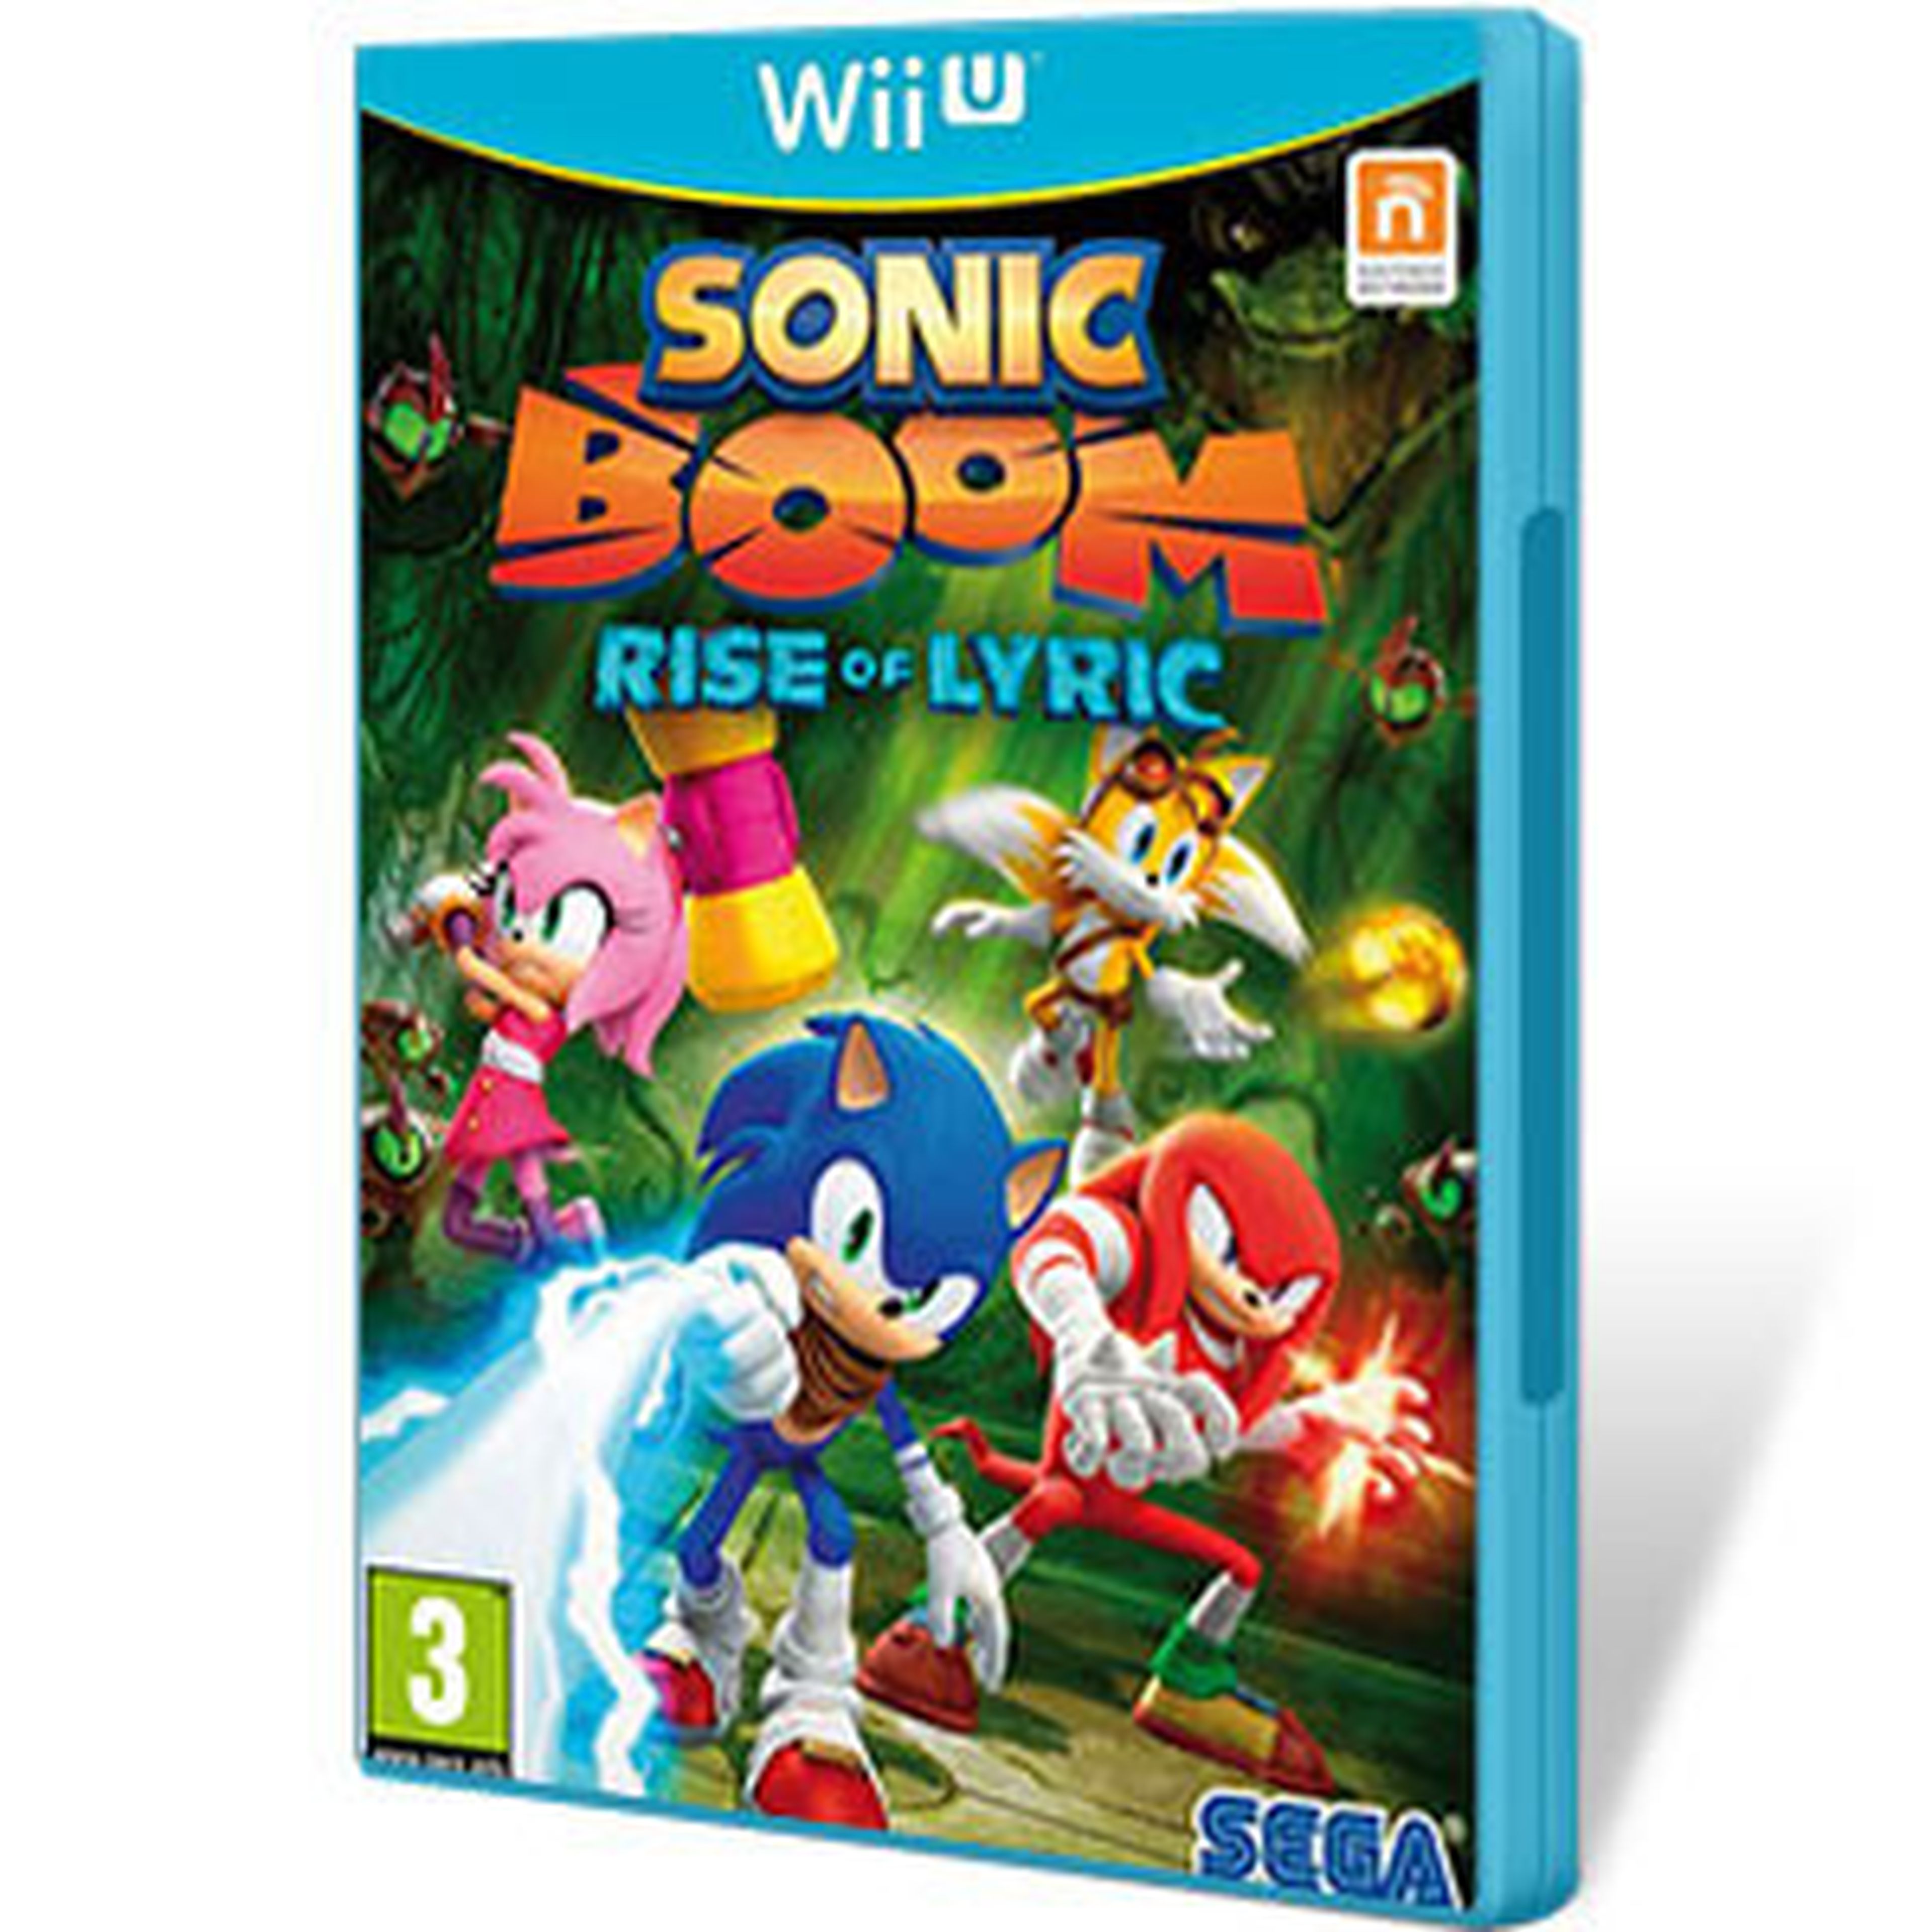 Sonic Boom Rise of Lyric para Wii U